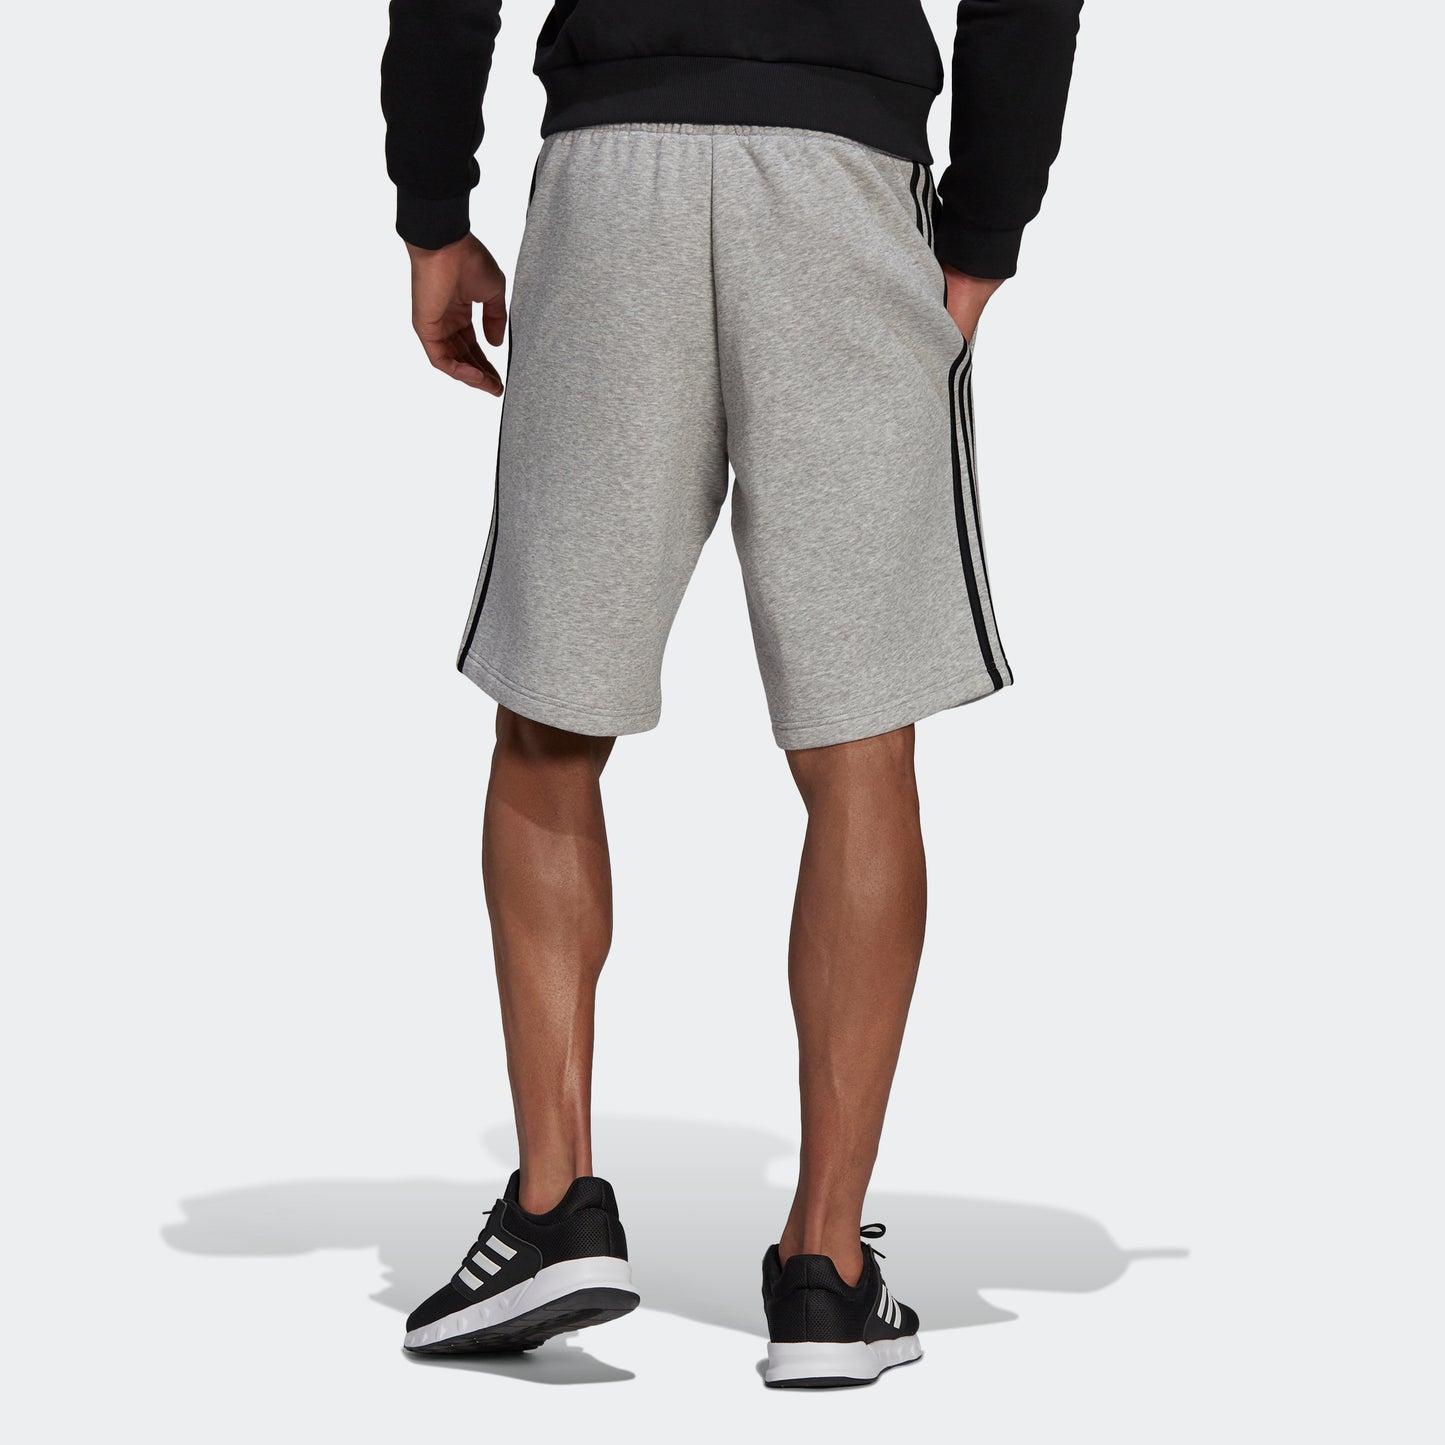 adidas Essentials Fleece Shorts | Gray | Men's